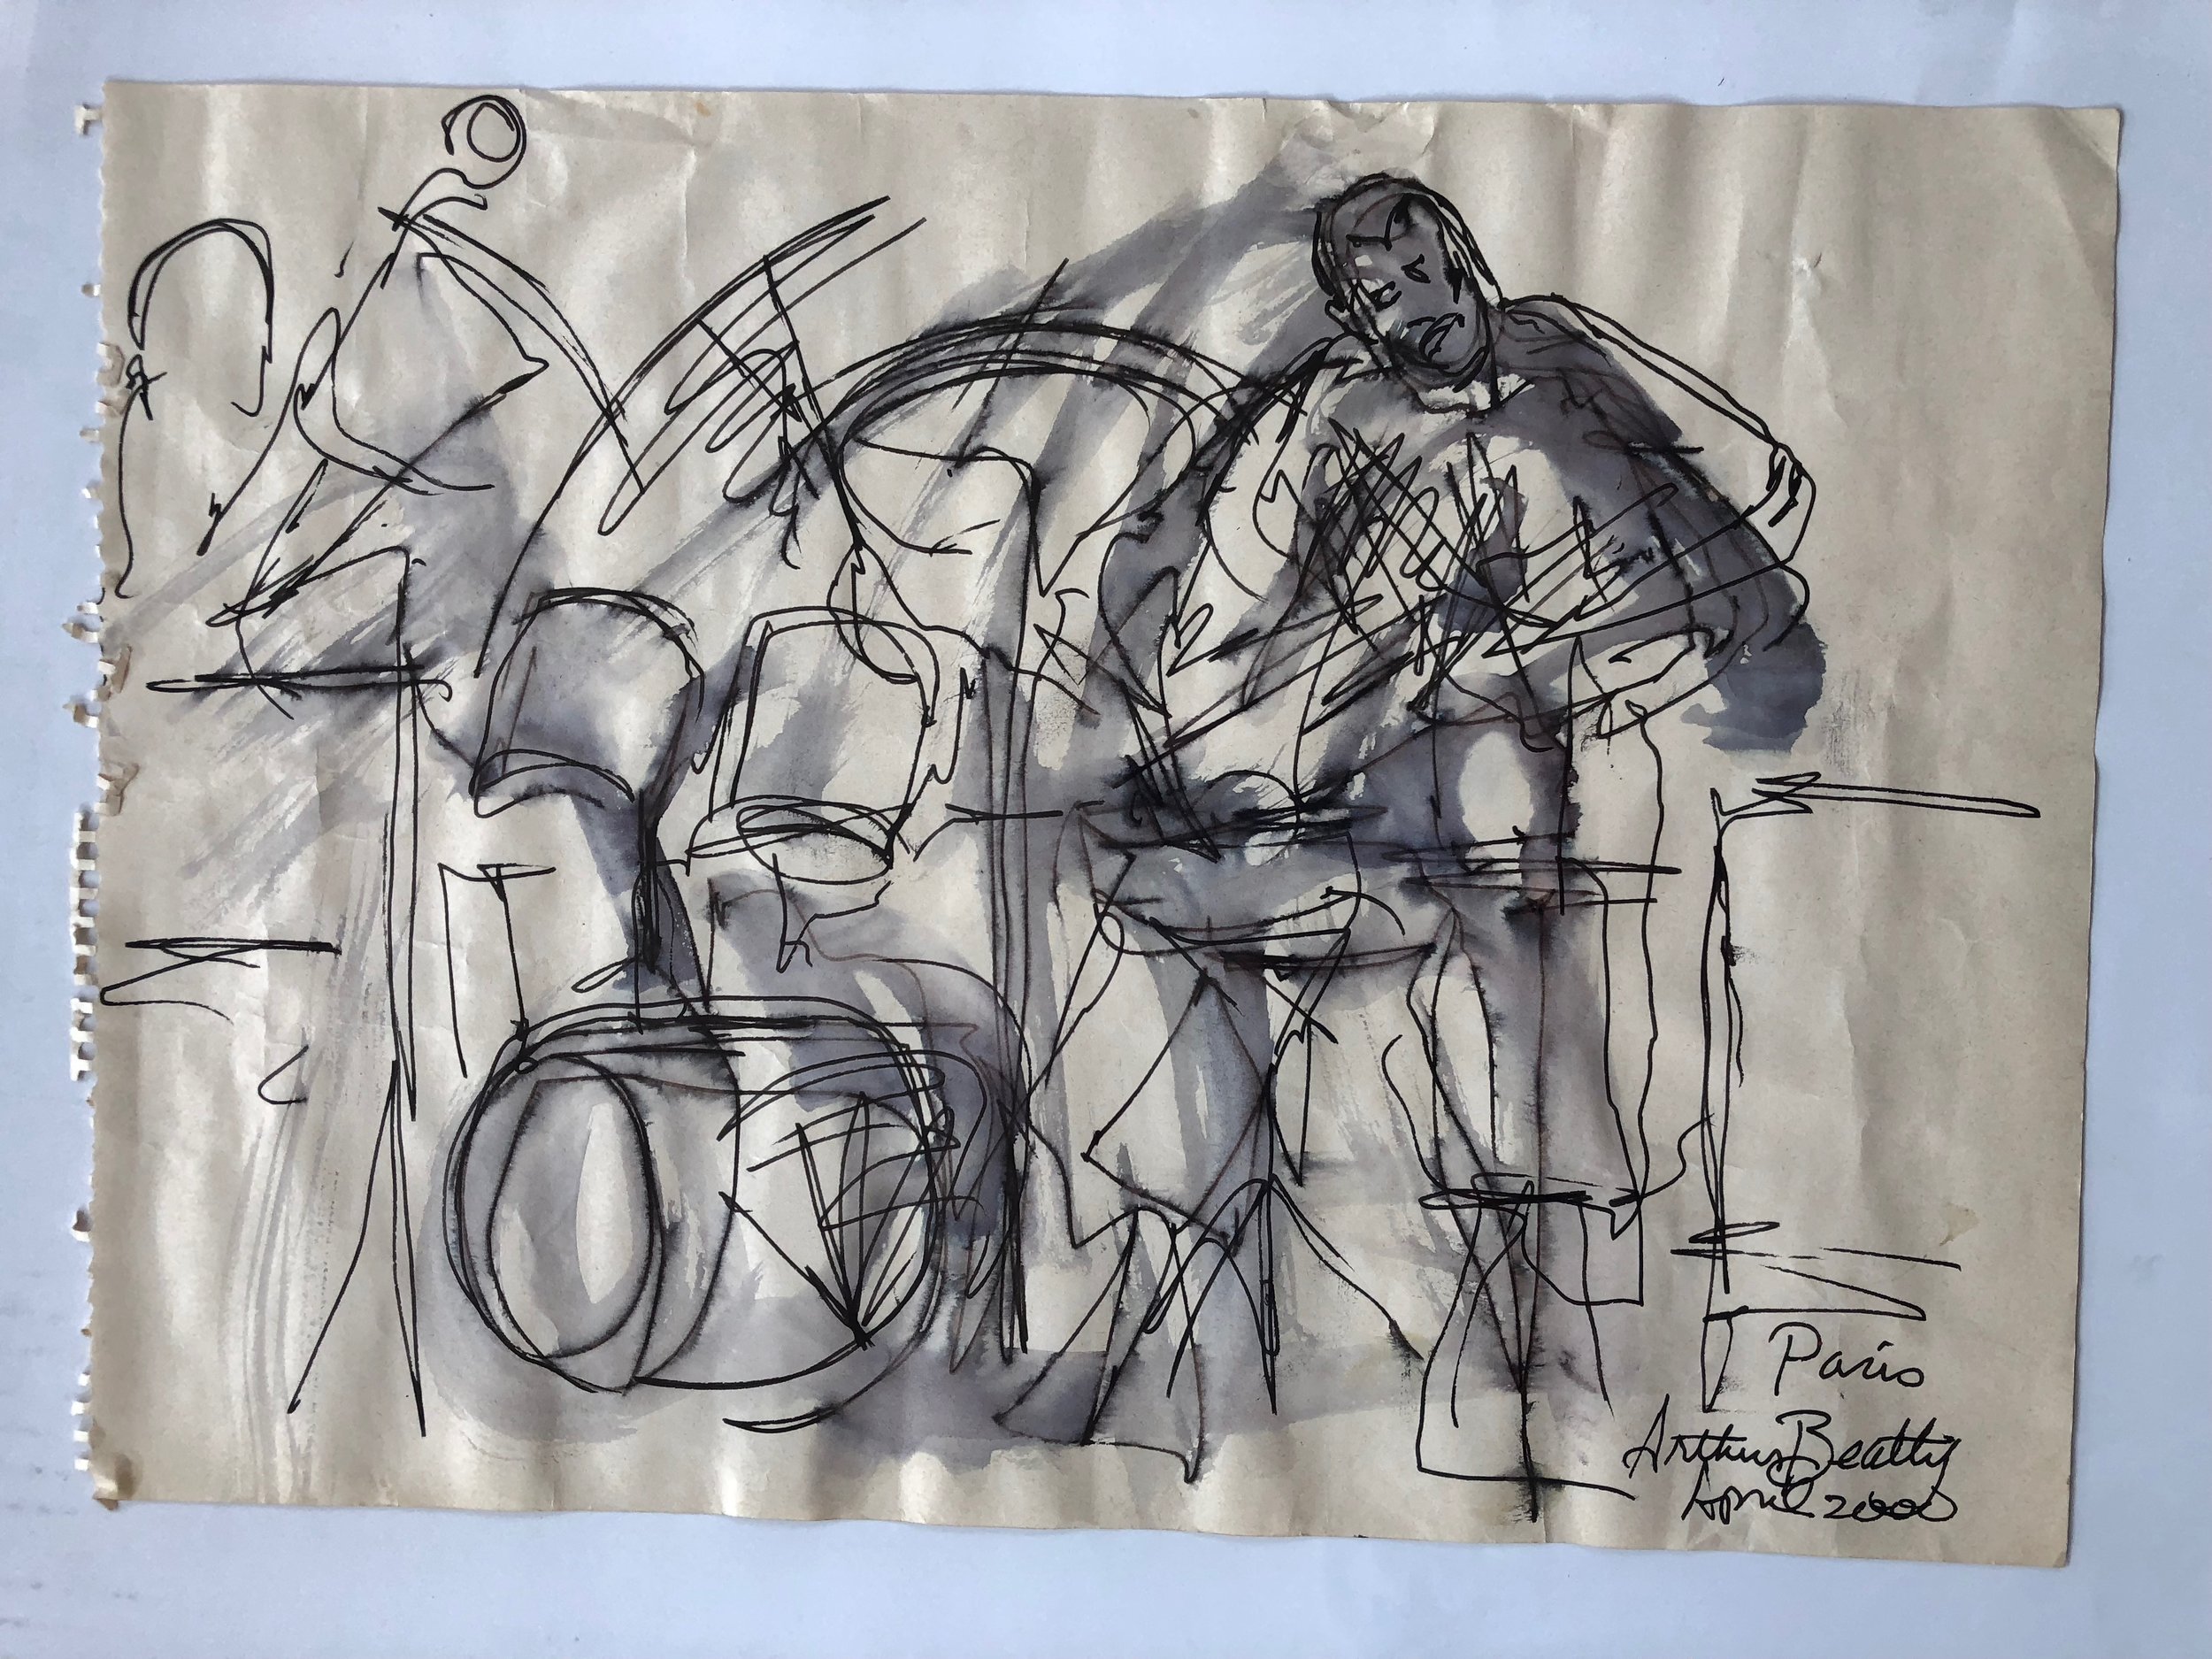 96, Arthur Beatty Sketch, Paris 2000.jpg